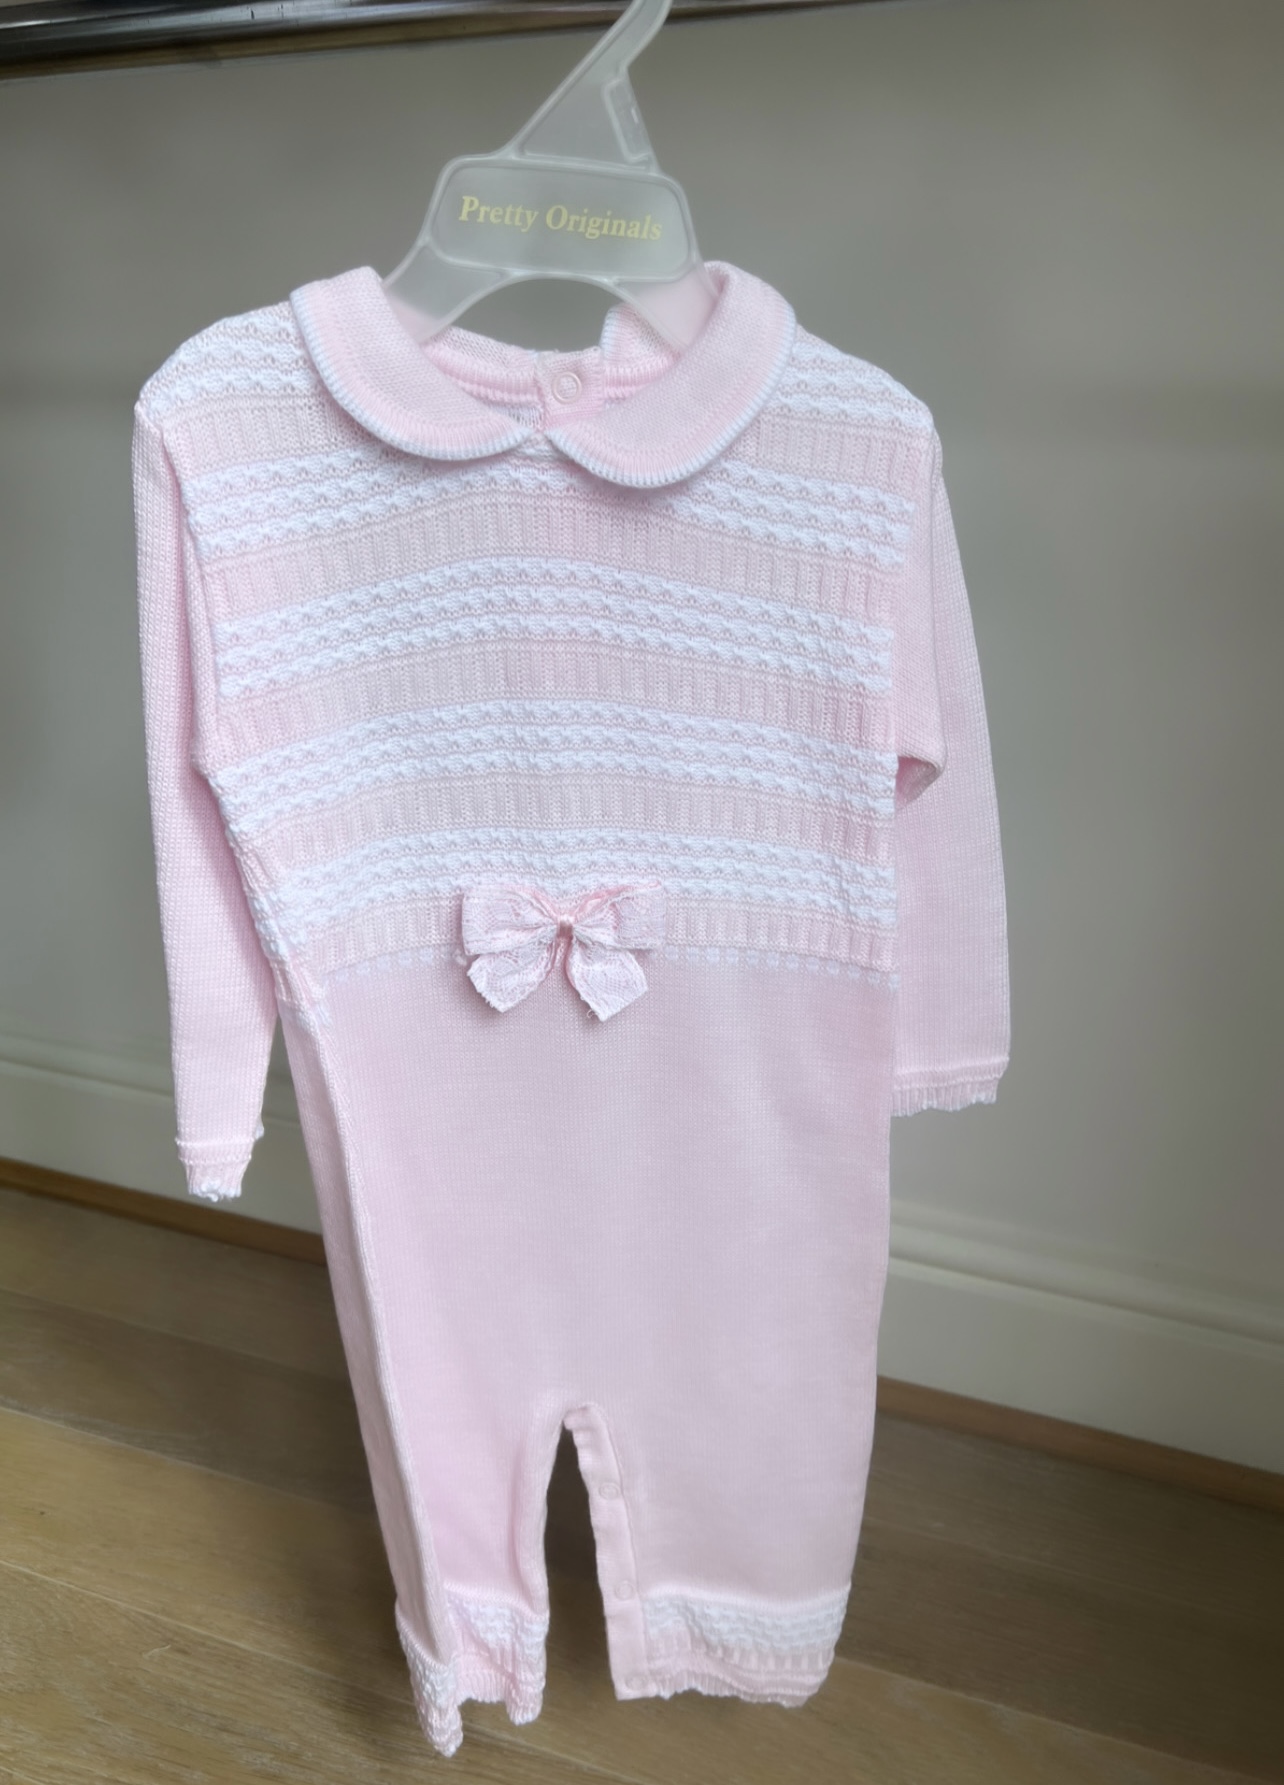 Pretty Originals AW21 Pink Knit Footless Babygrow